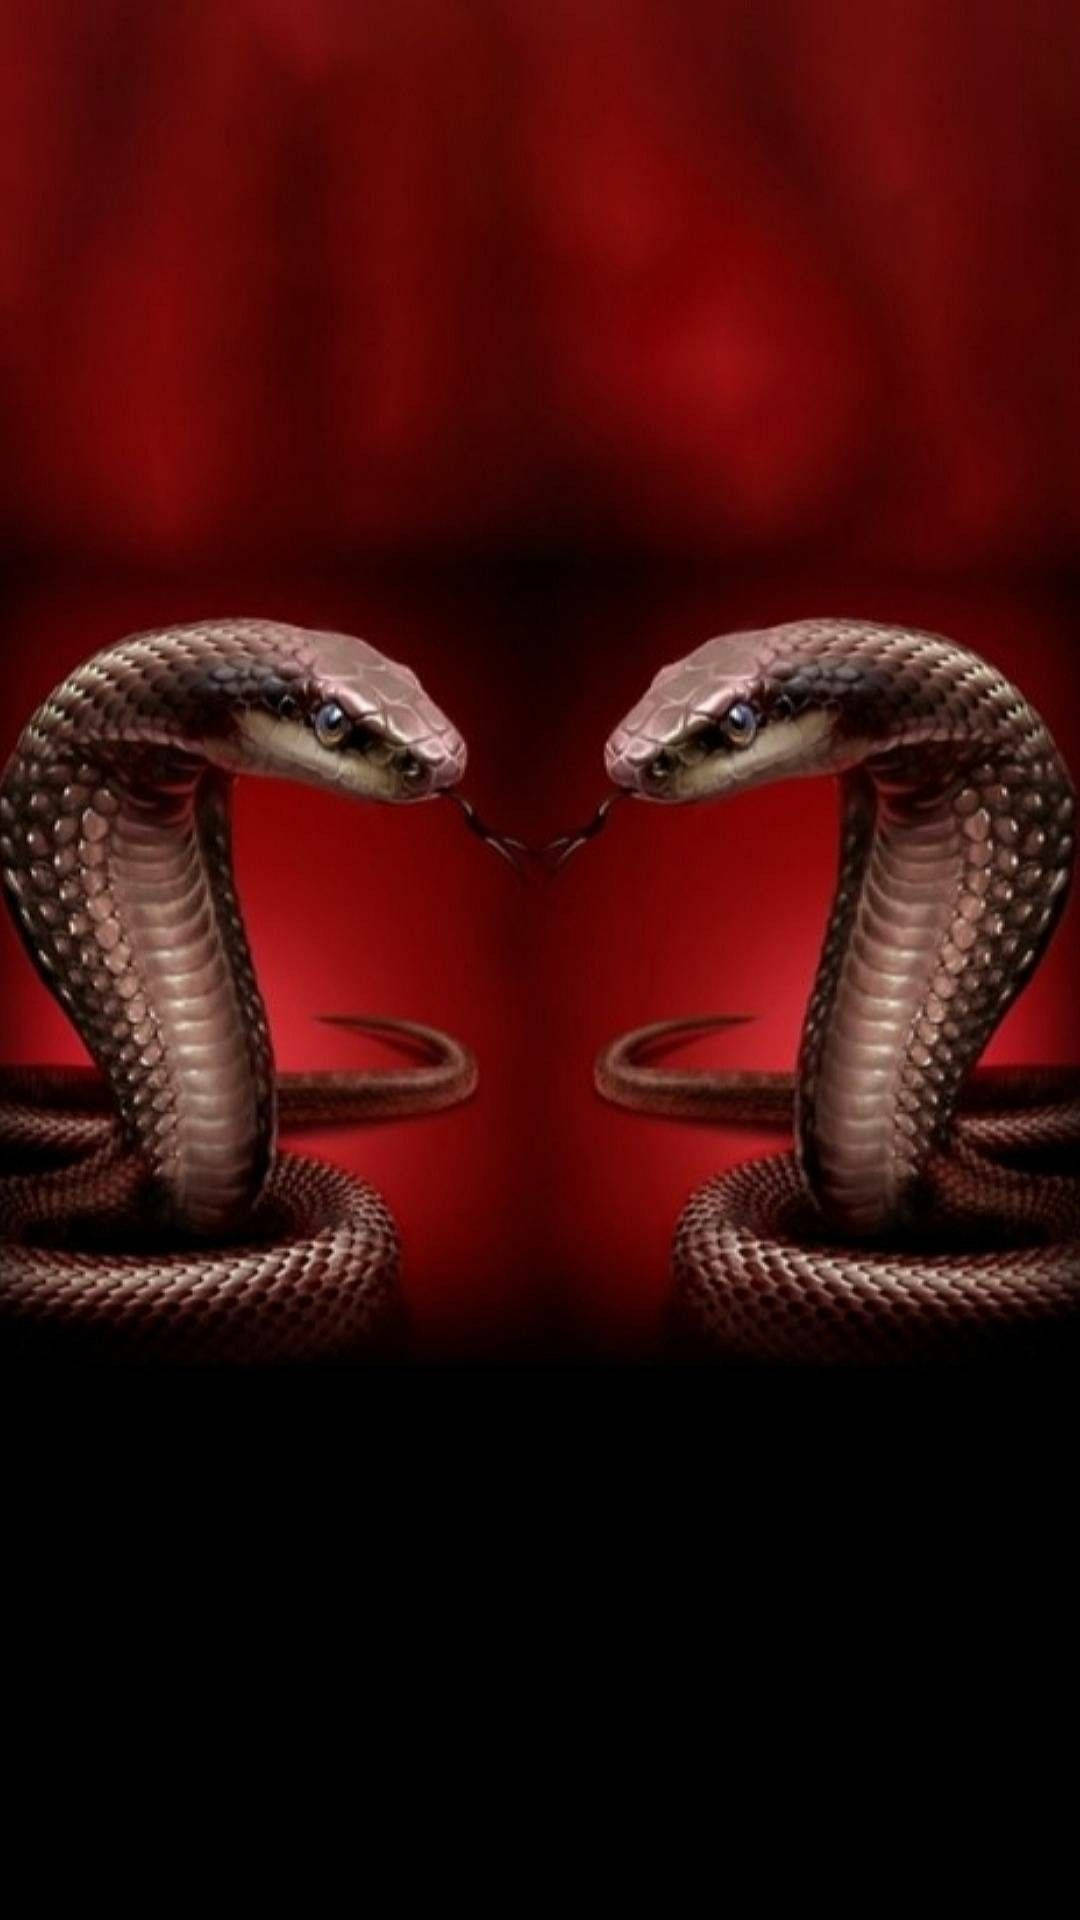 Black Mamba Snake Digital Art Wallpaper